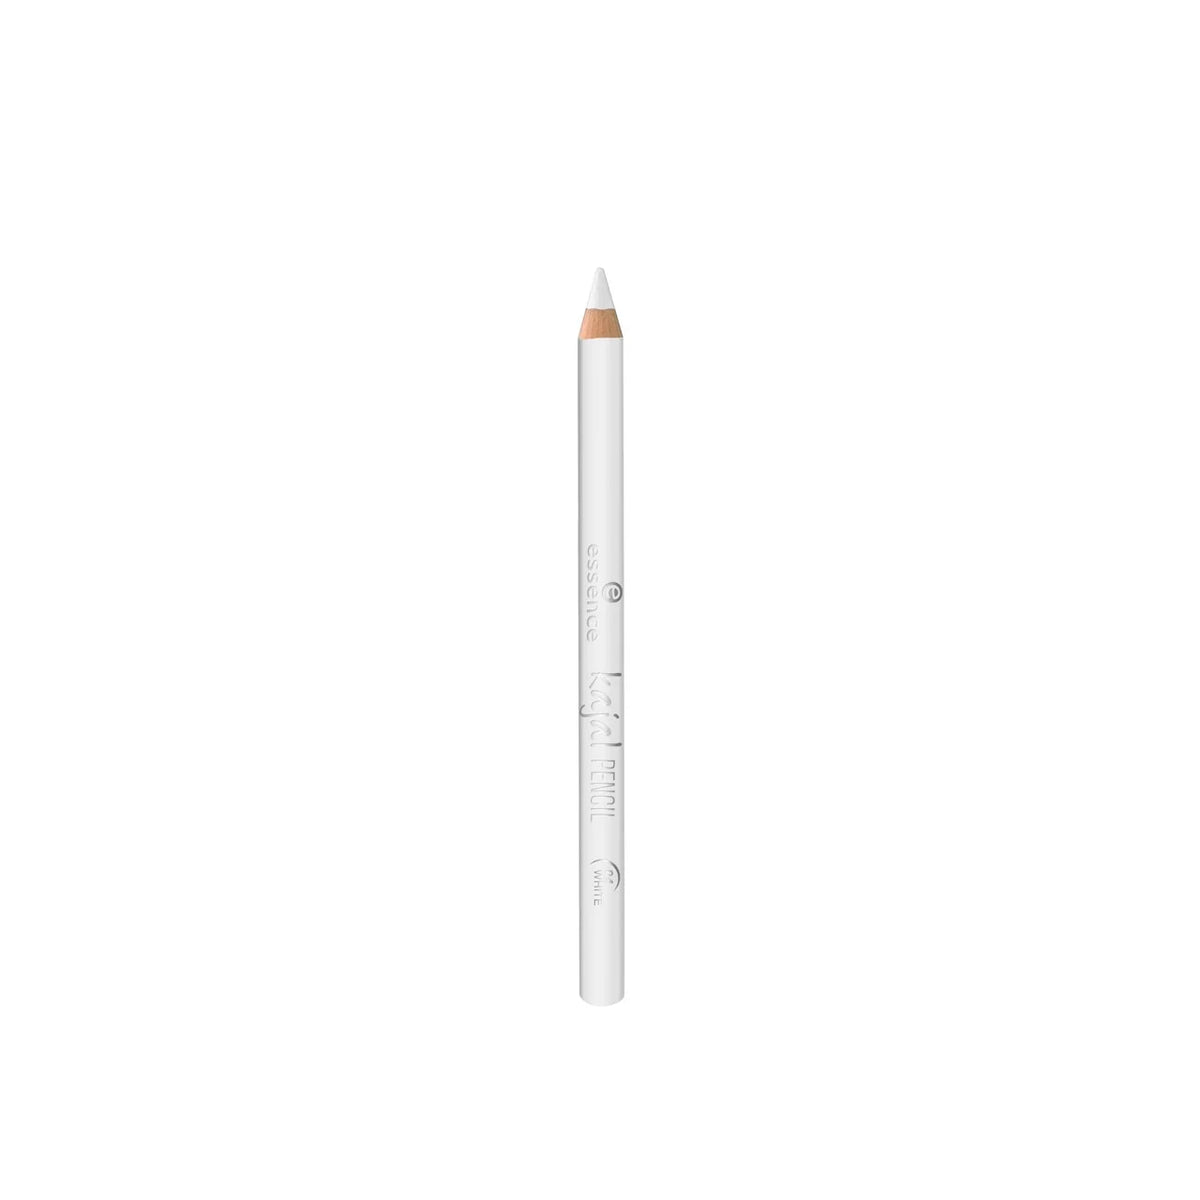 Essence Kajal Pencil ( 04 White )